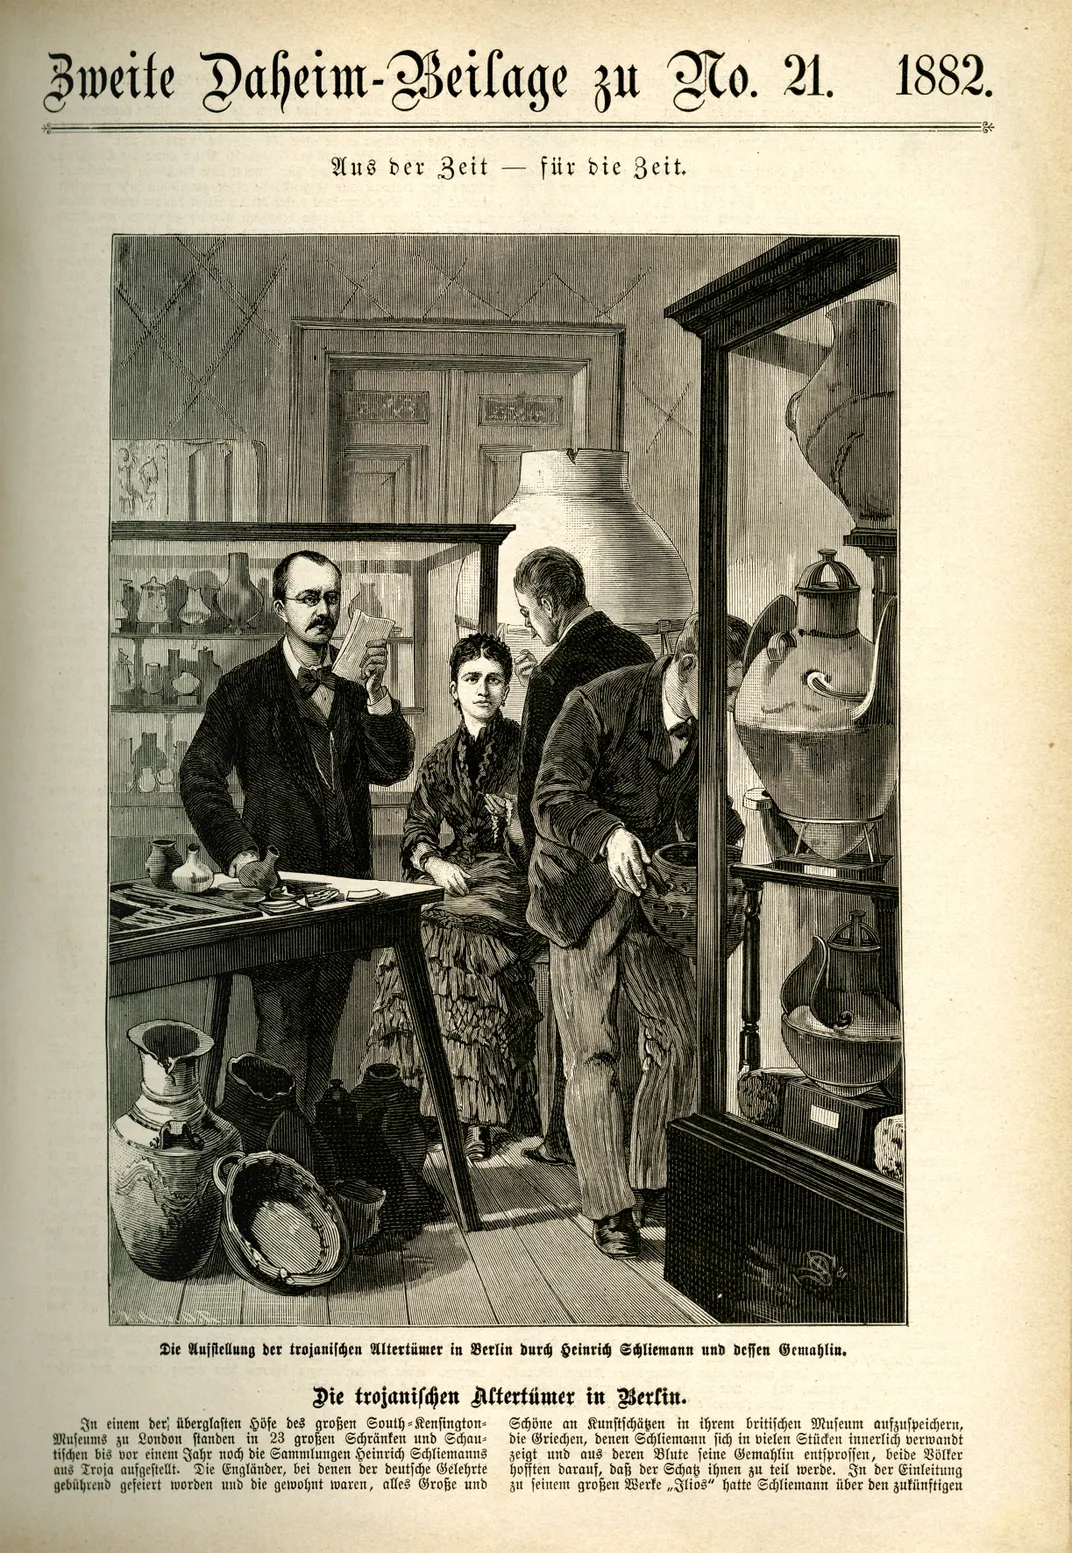 1882 drawing of Heinrich Schliemann and his wife installing Trojan antiquities in Berlin